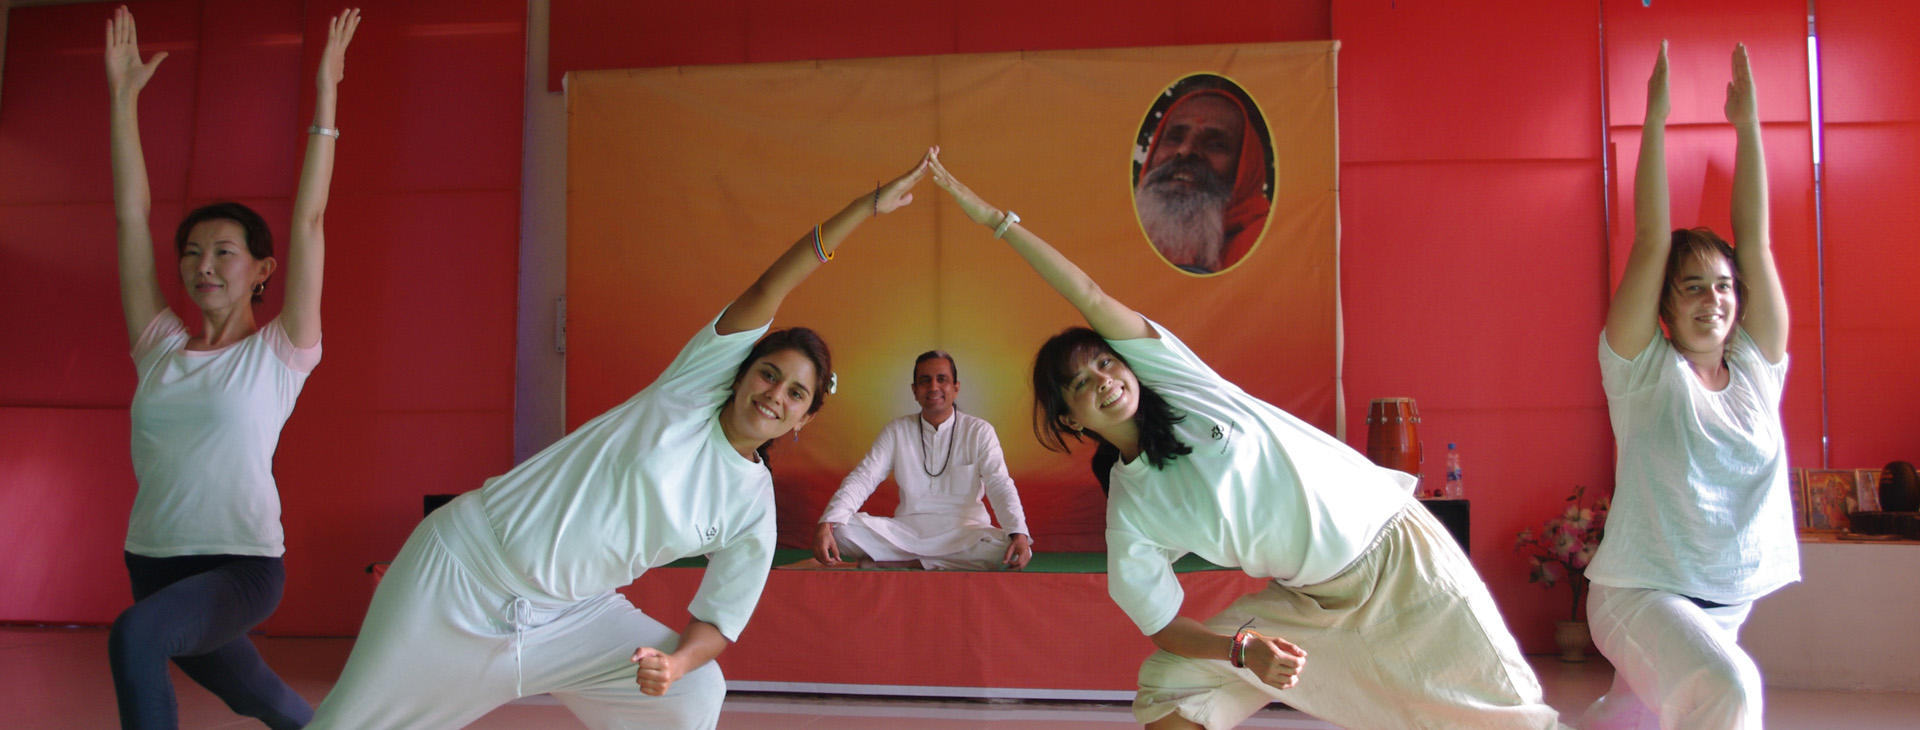 Paramanand Yoga Studio India